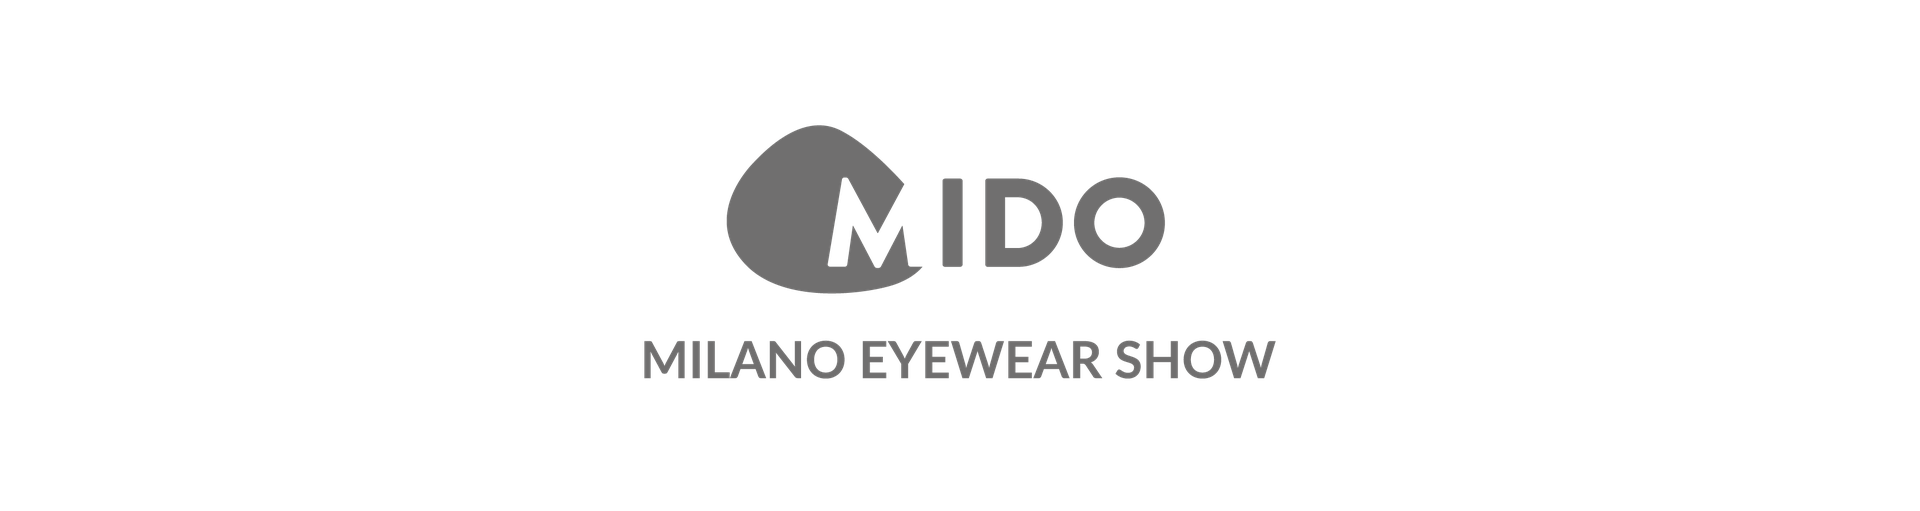 MIDO | Milano eyewear show